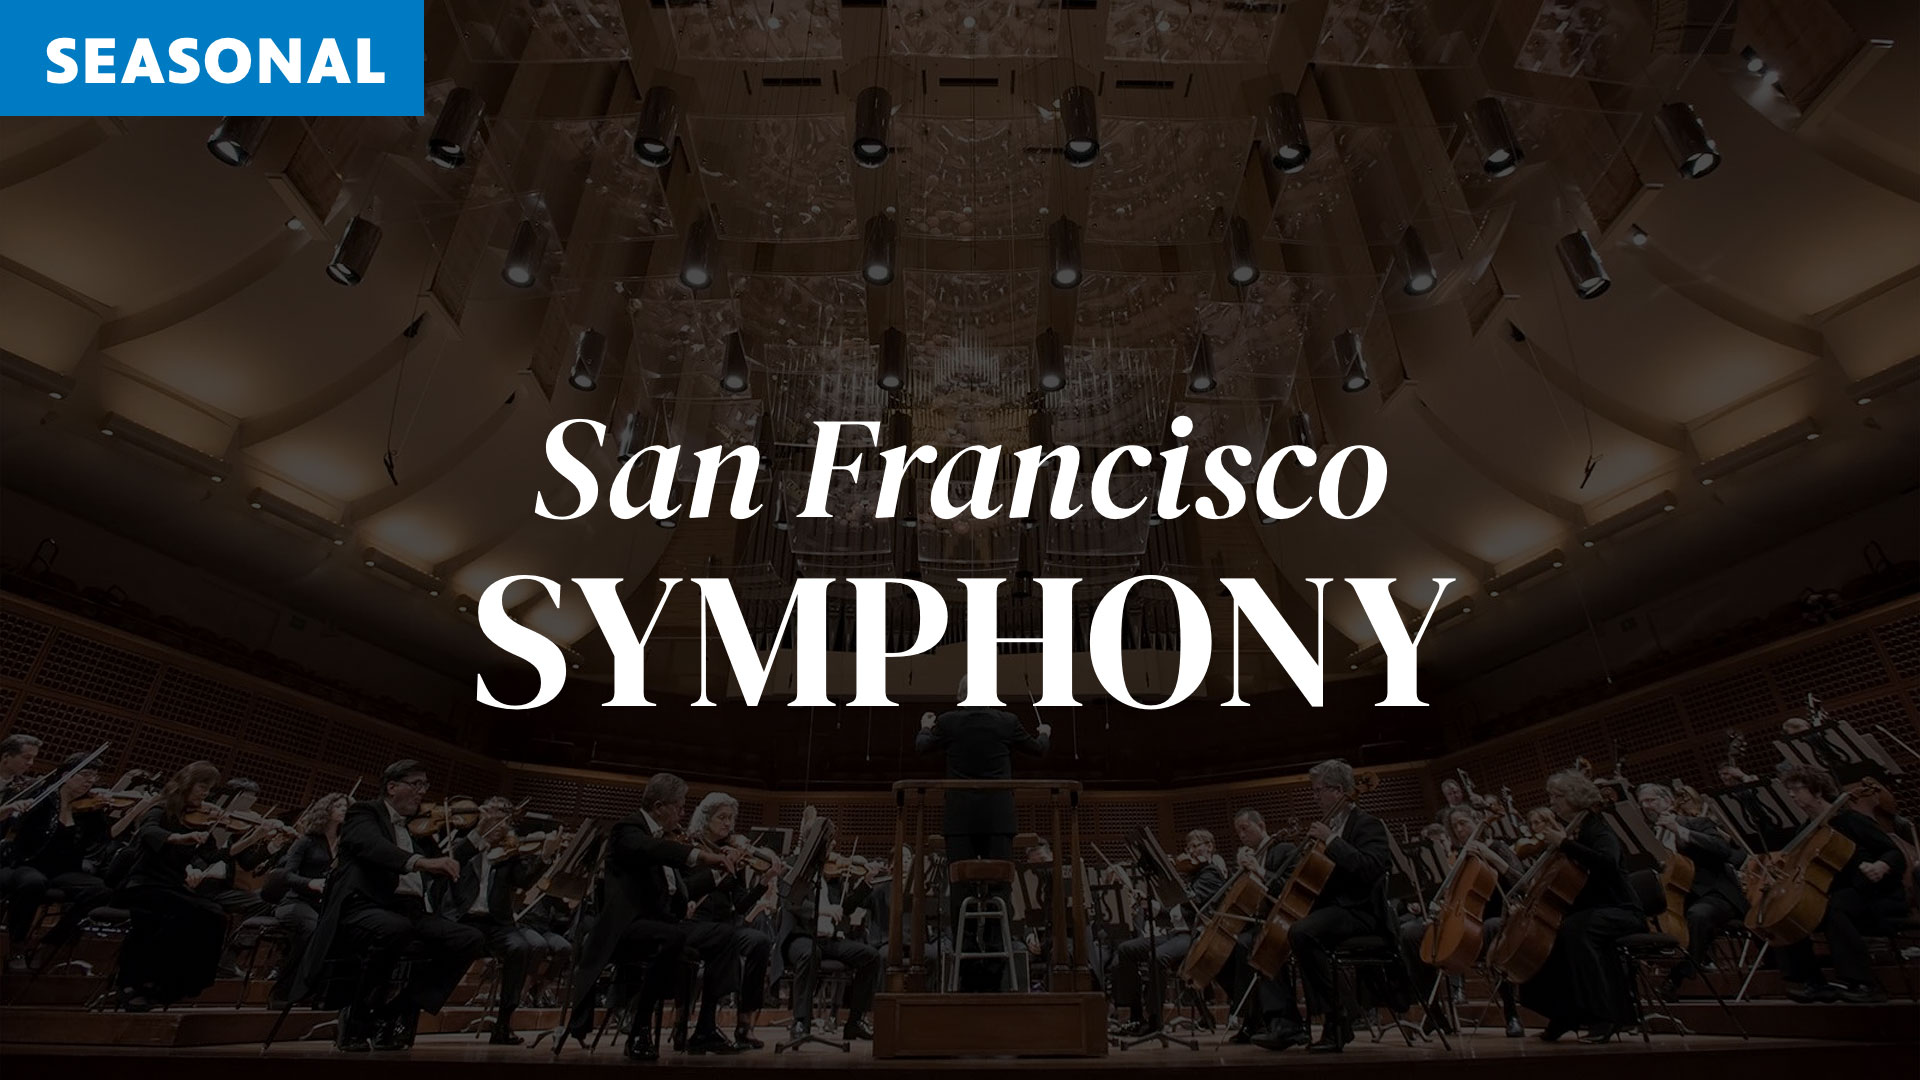 San Francisco Symphony - Seasonal